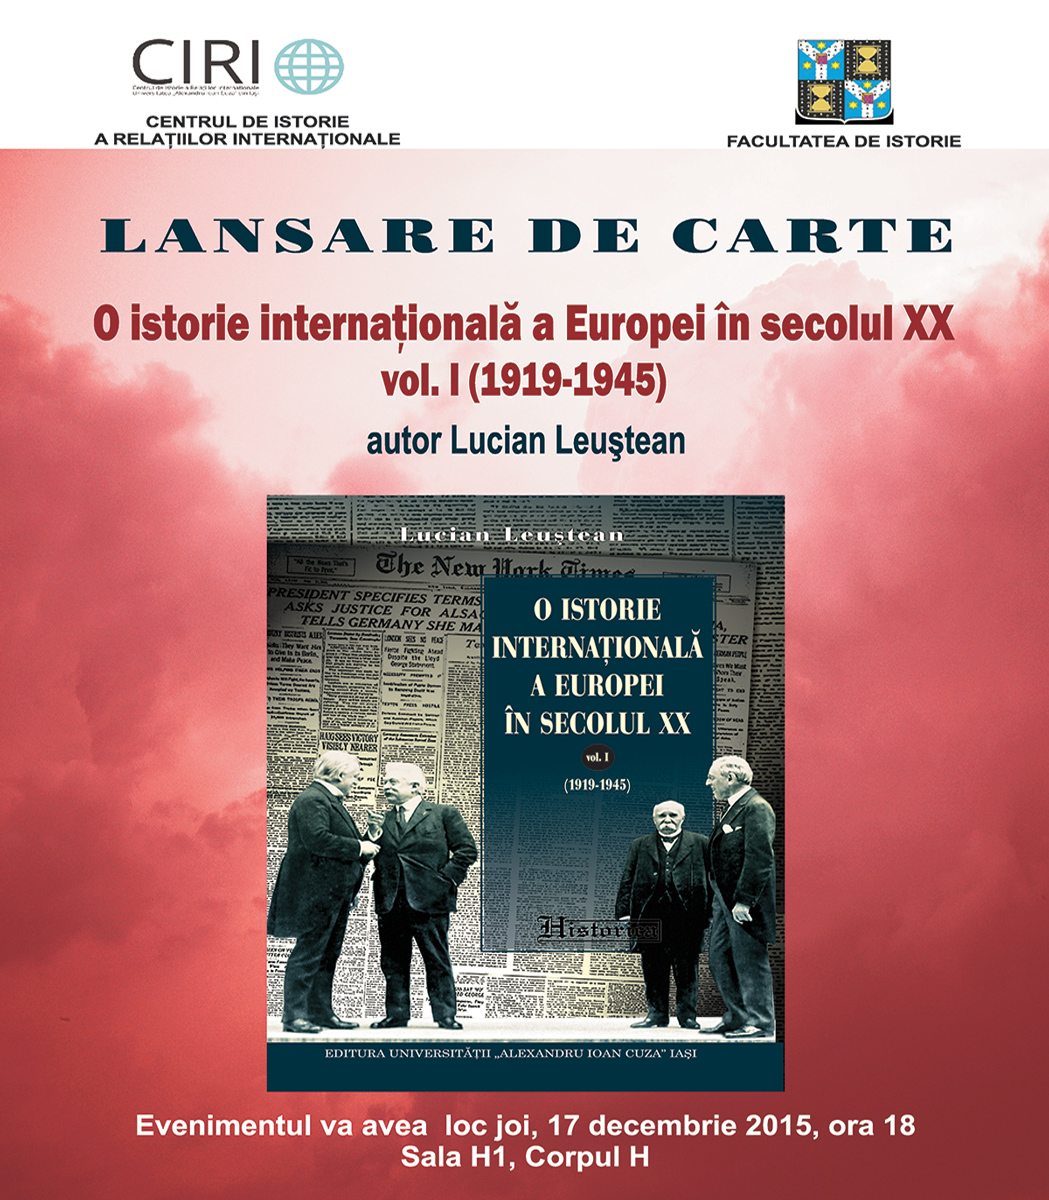 CIRI_lansare-carte_Lucian-Leustean_O-istorie-internationala-a-Europei